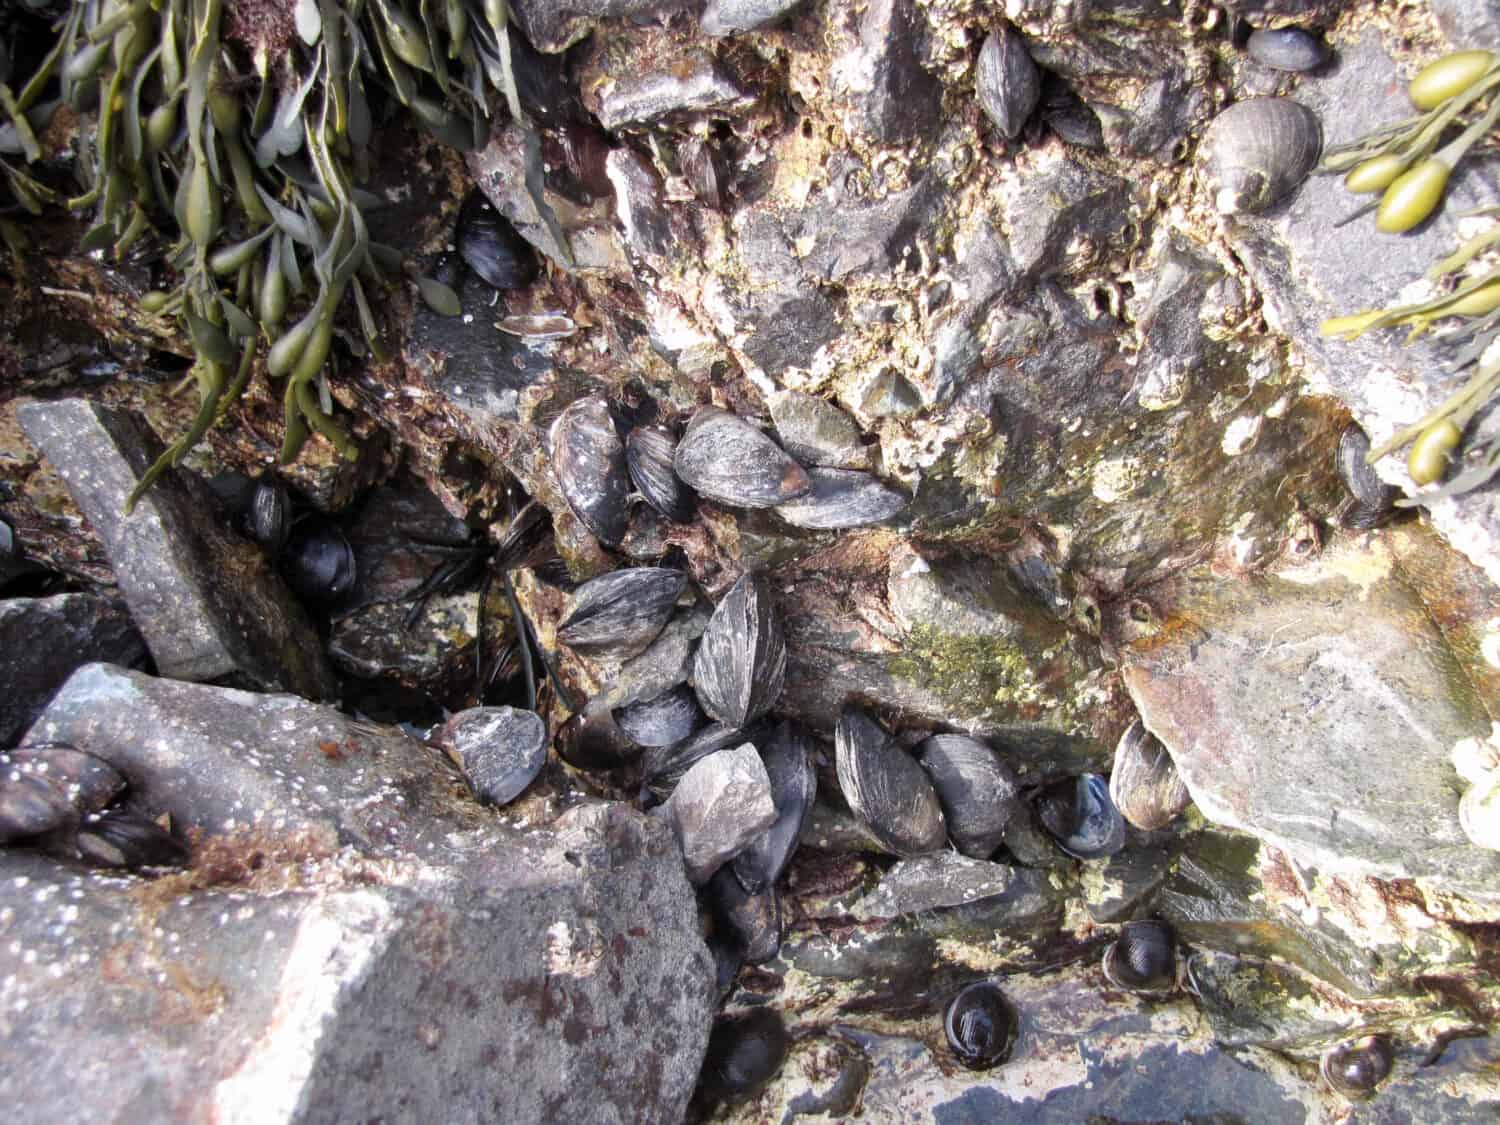 Seaweed, periwinkles, mussels, and barnacles.